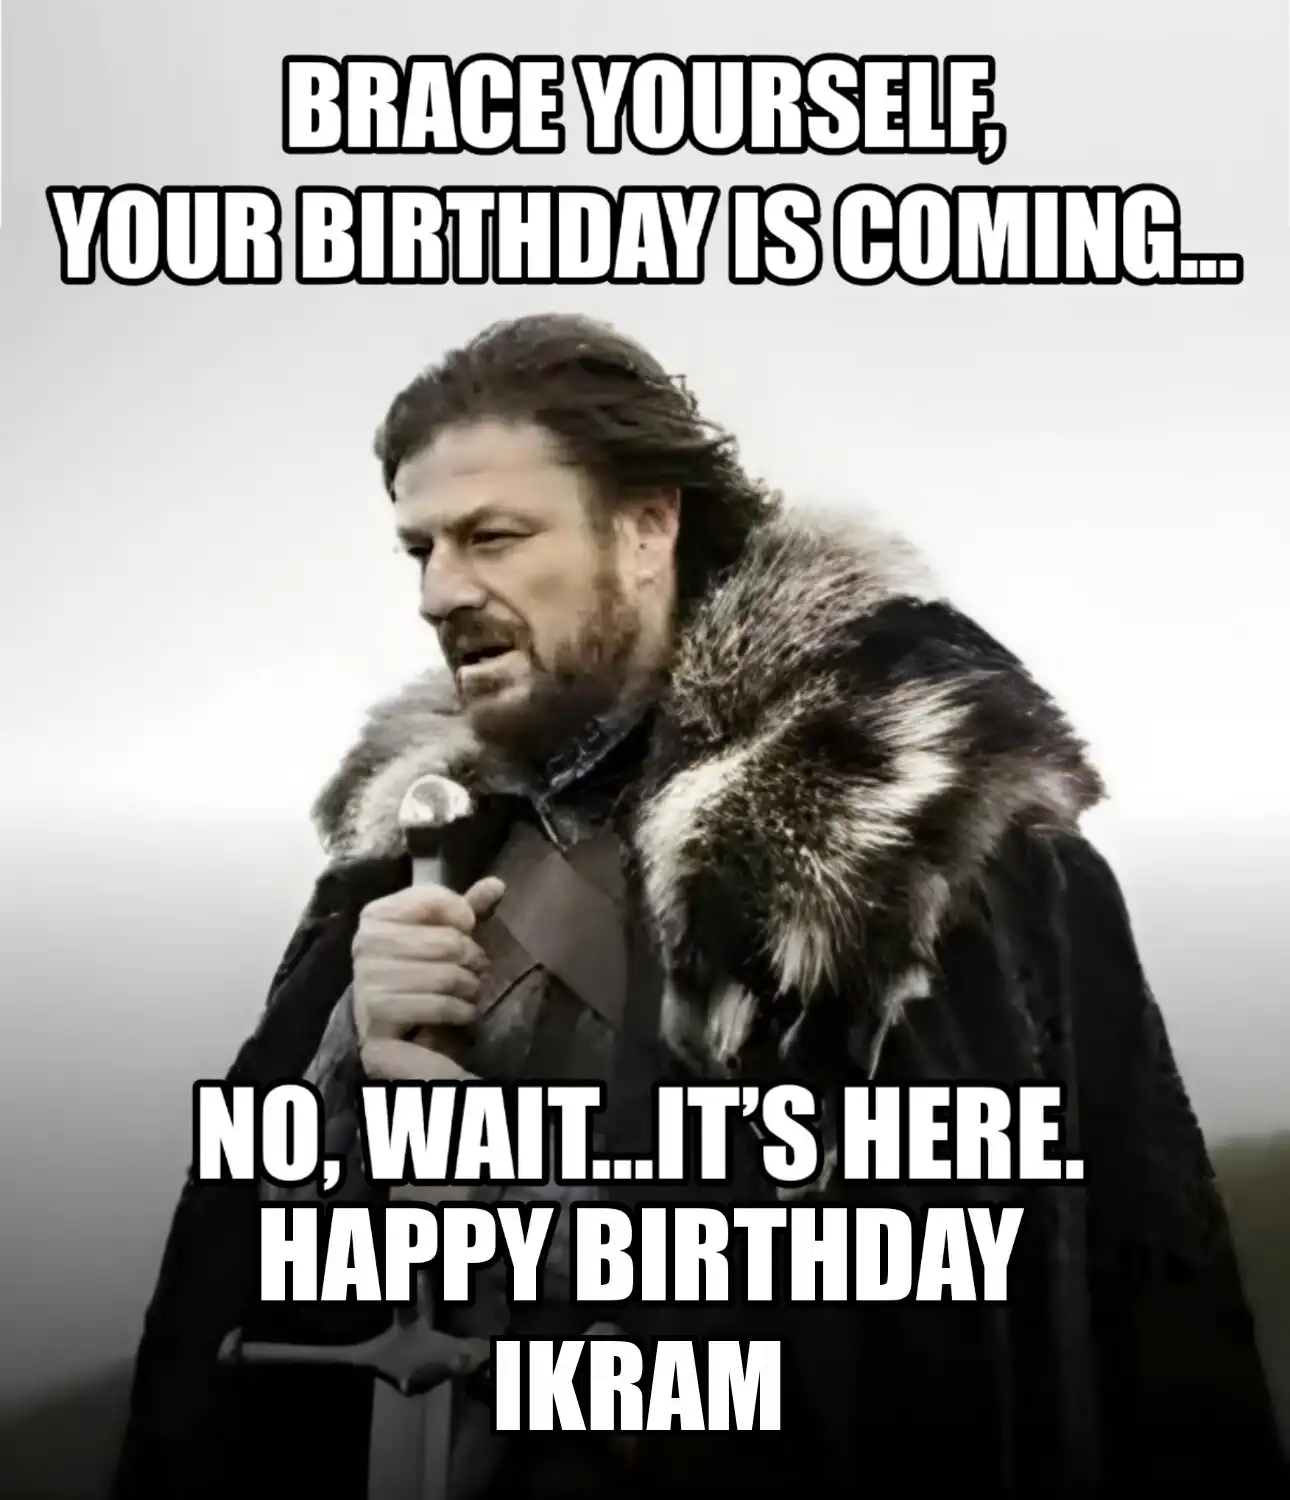 Happy Birthday Ikram Brace Yourself Your Birthday Is Coming Meme